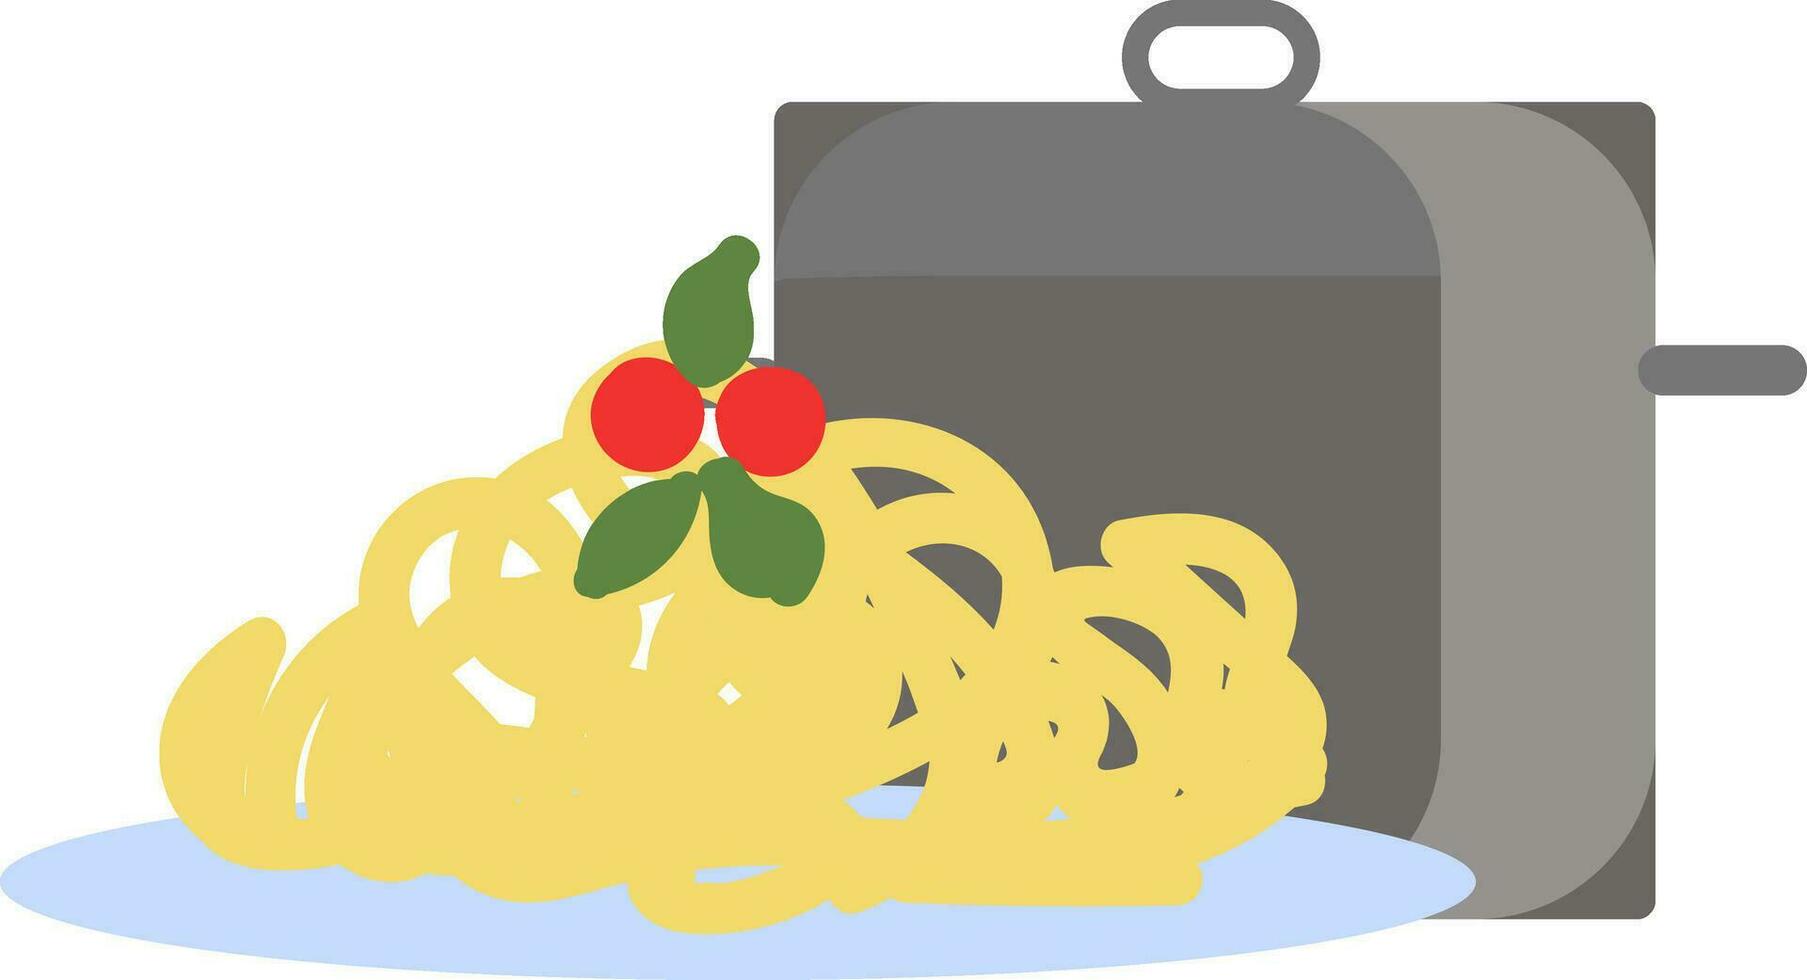 Spaghetti hand drawn design, illustration, vector on white background.